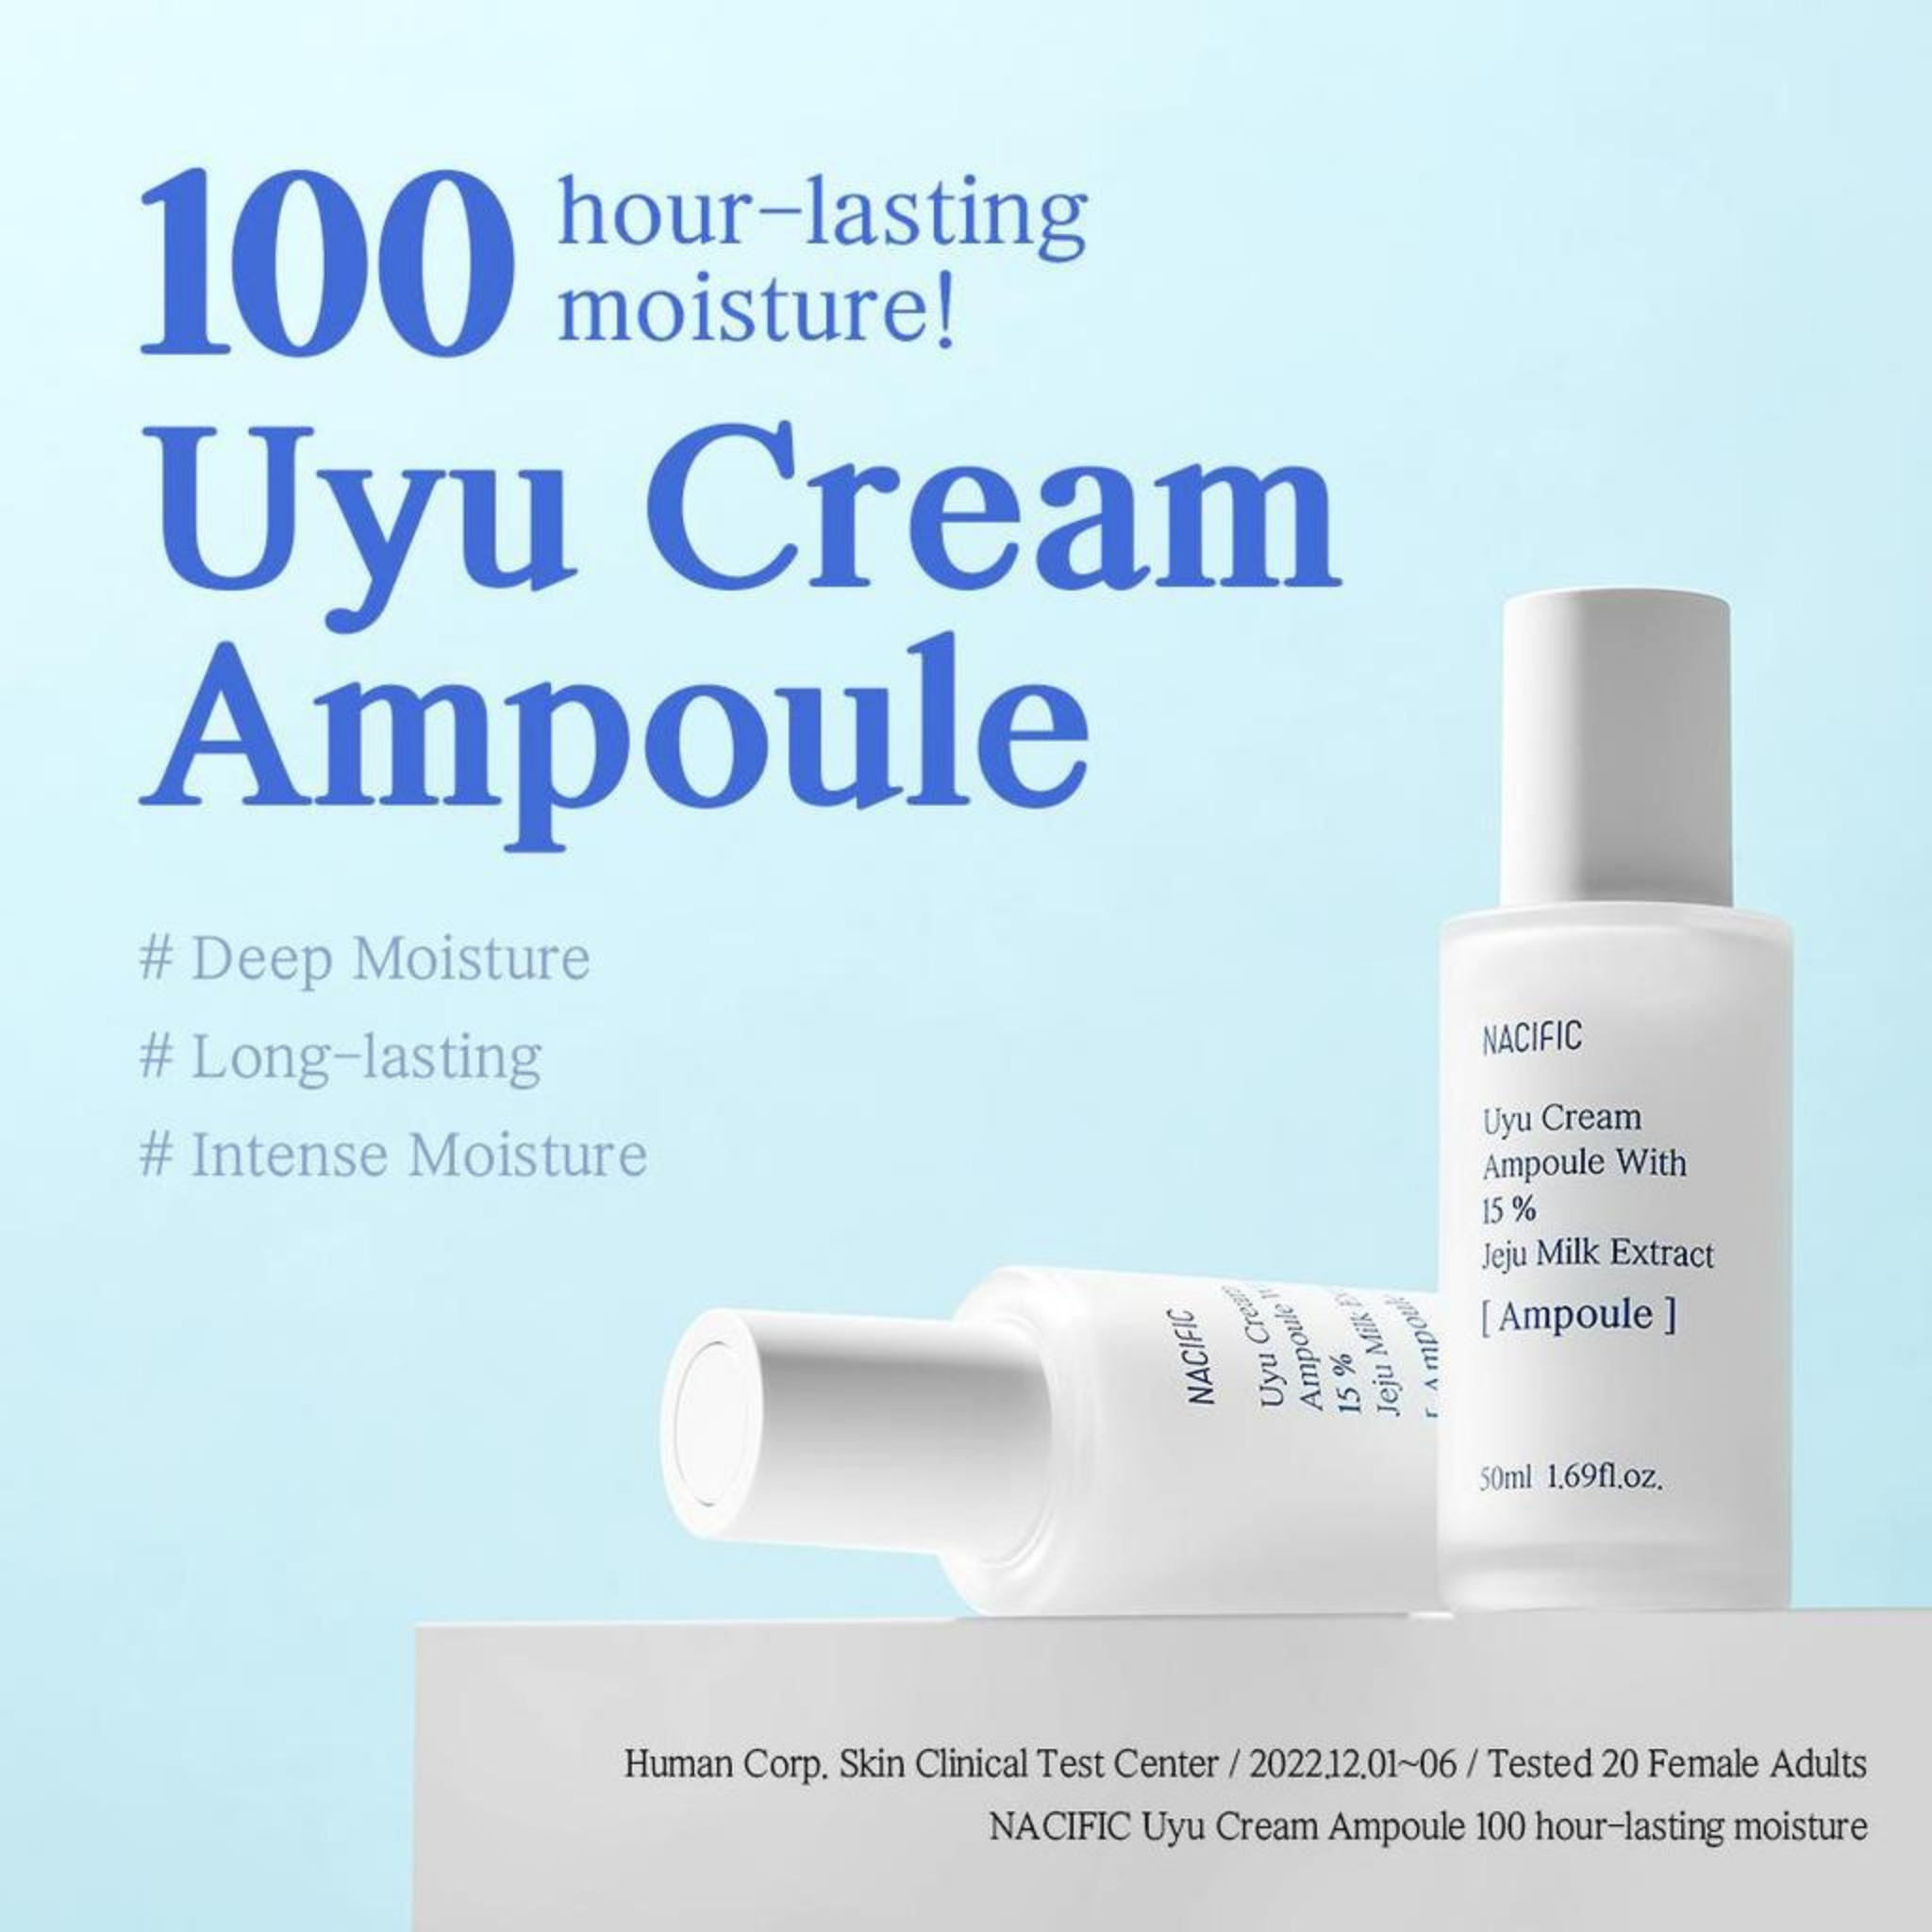 NACIFIC Uyu Cream Ampoule (50ml) benefits